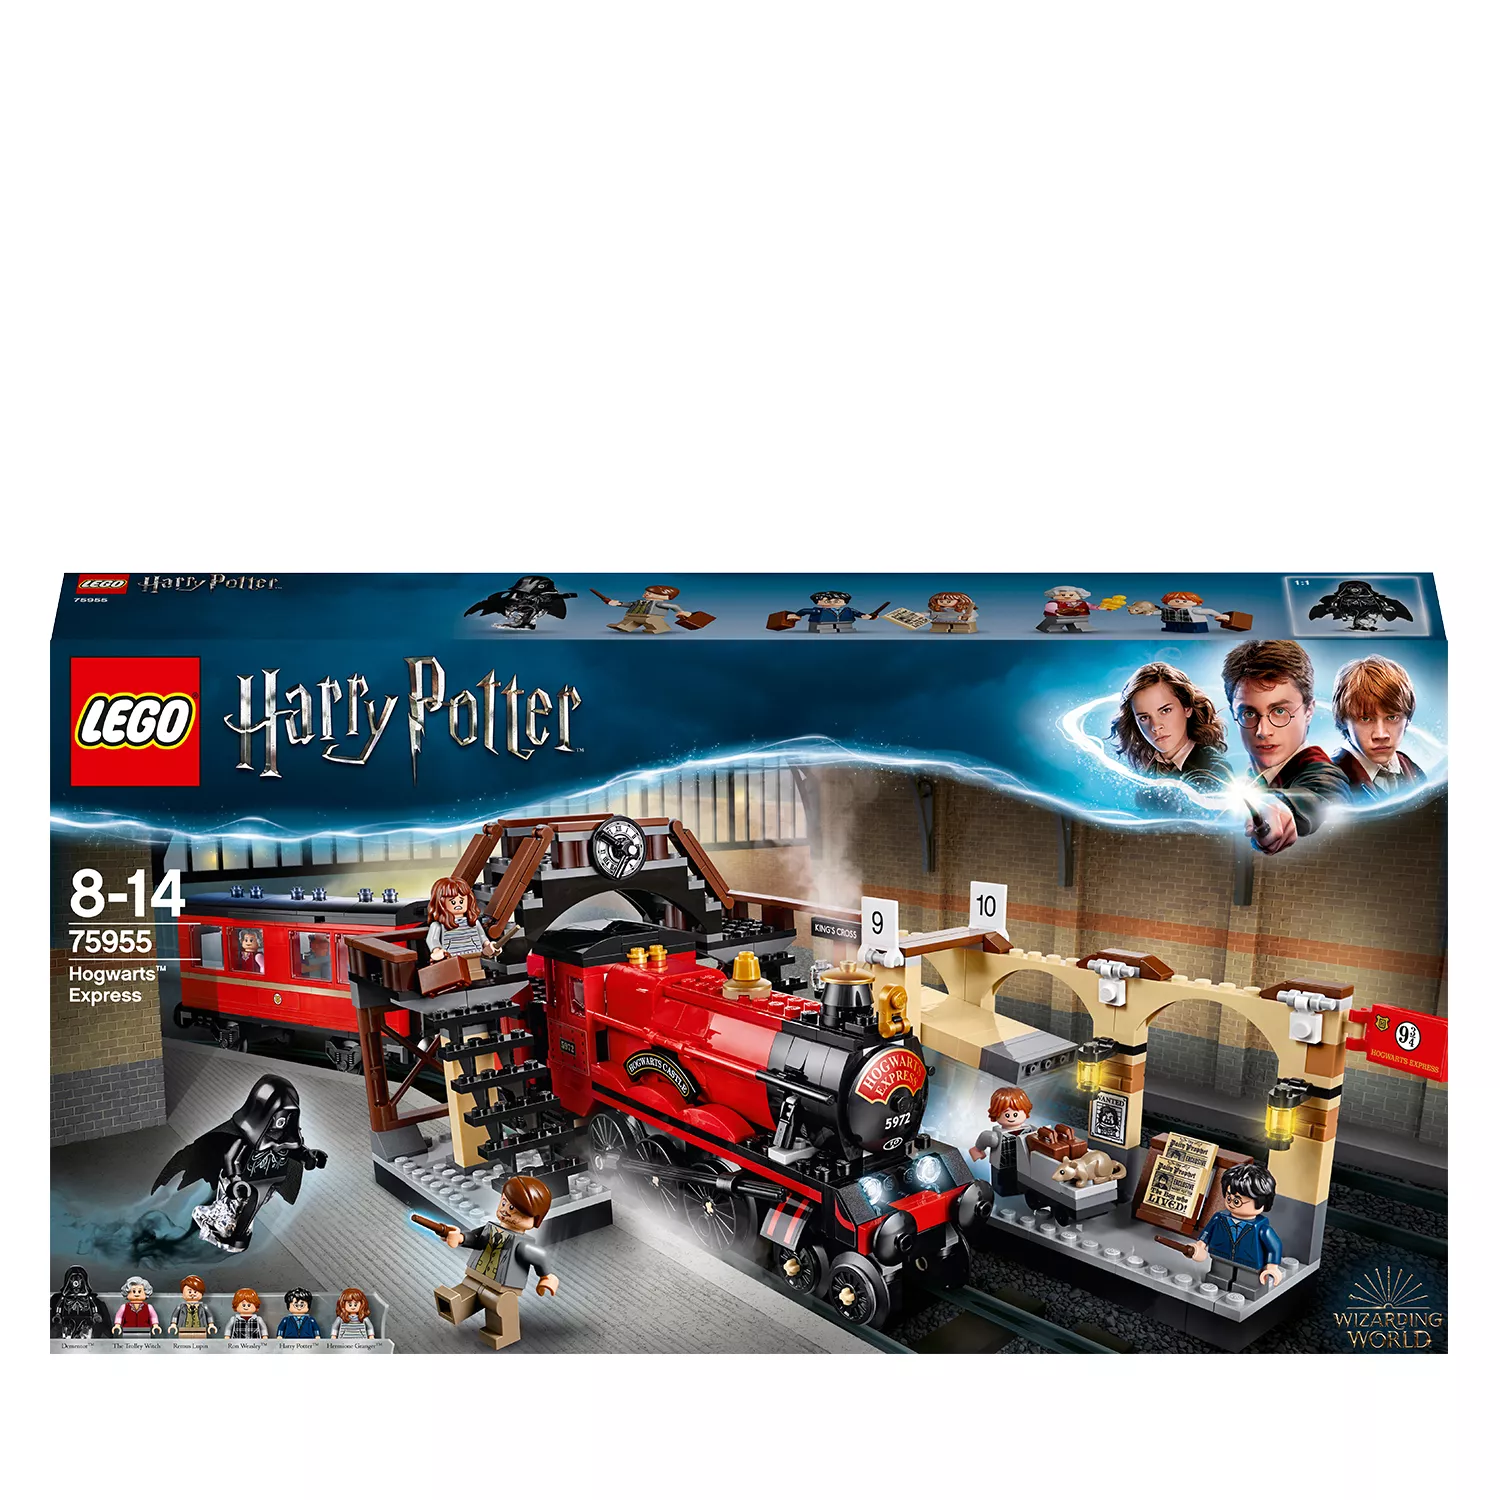 LEGO Harry Potter Hogwarts Express